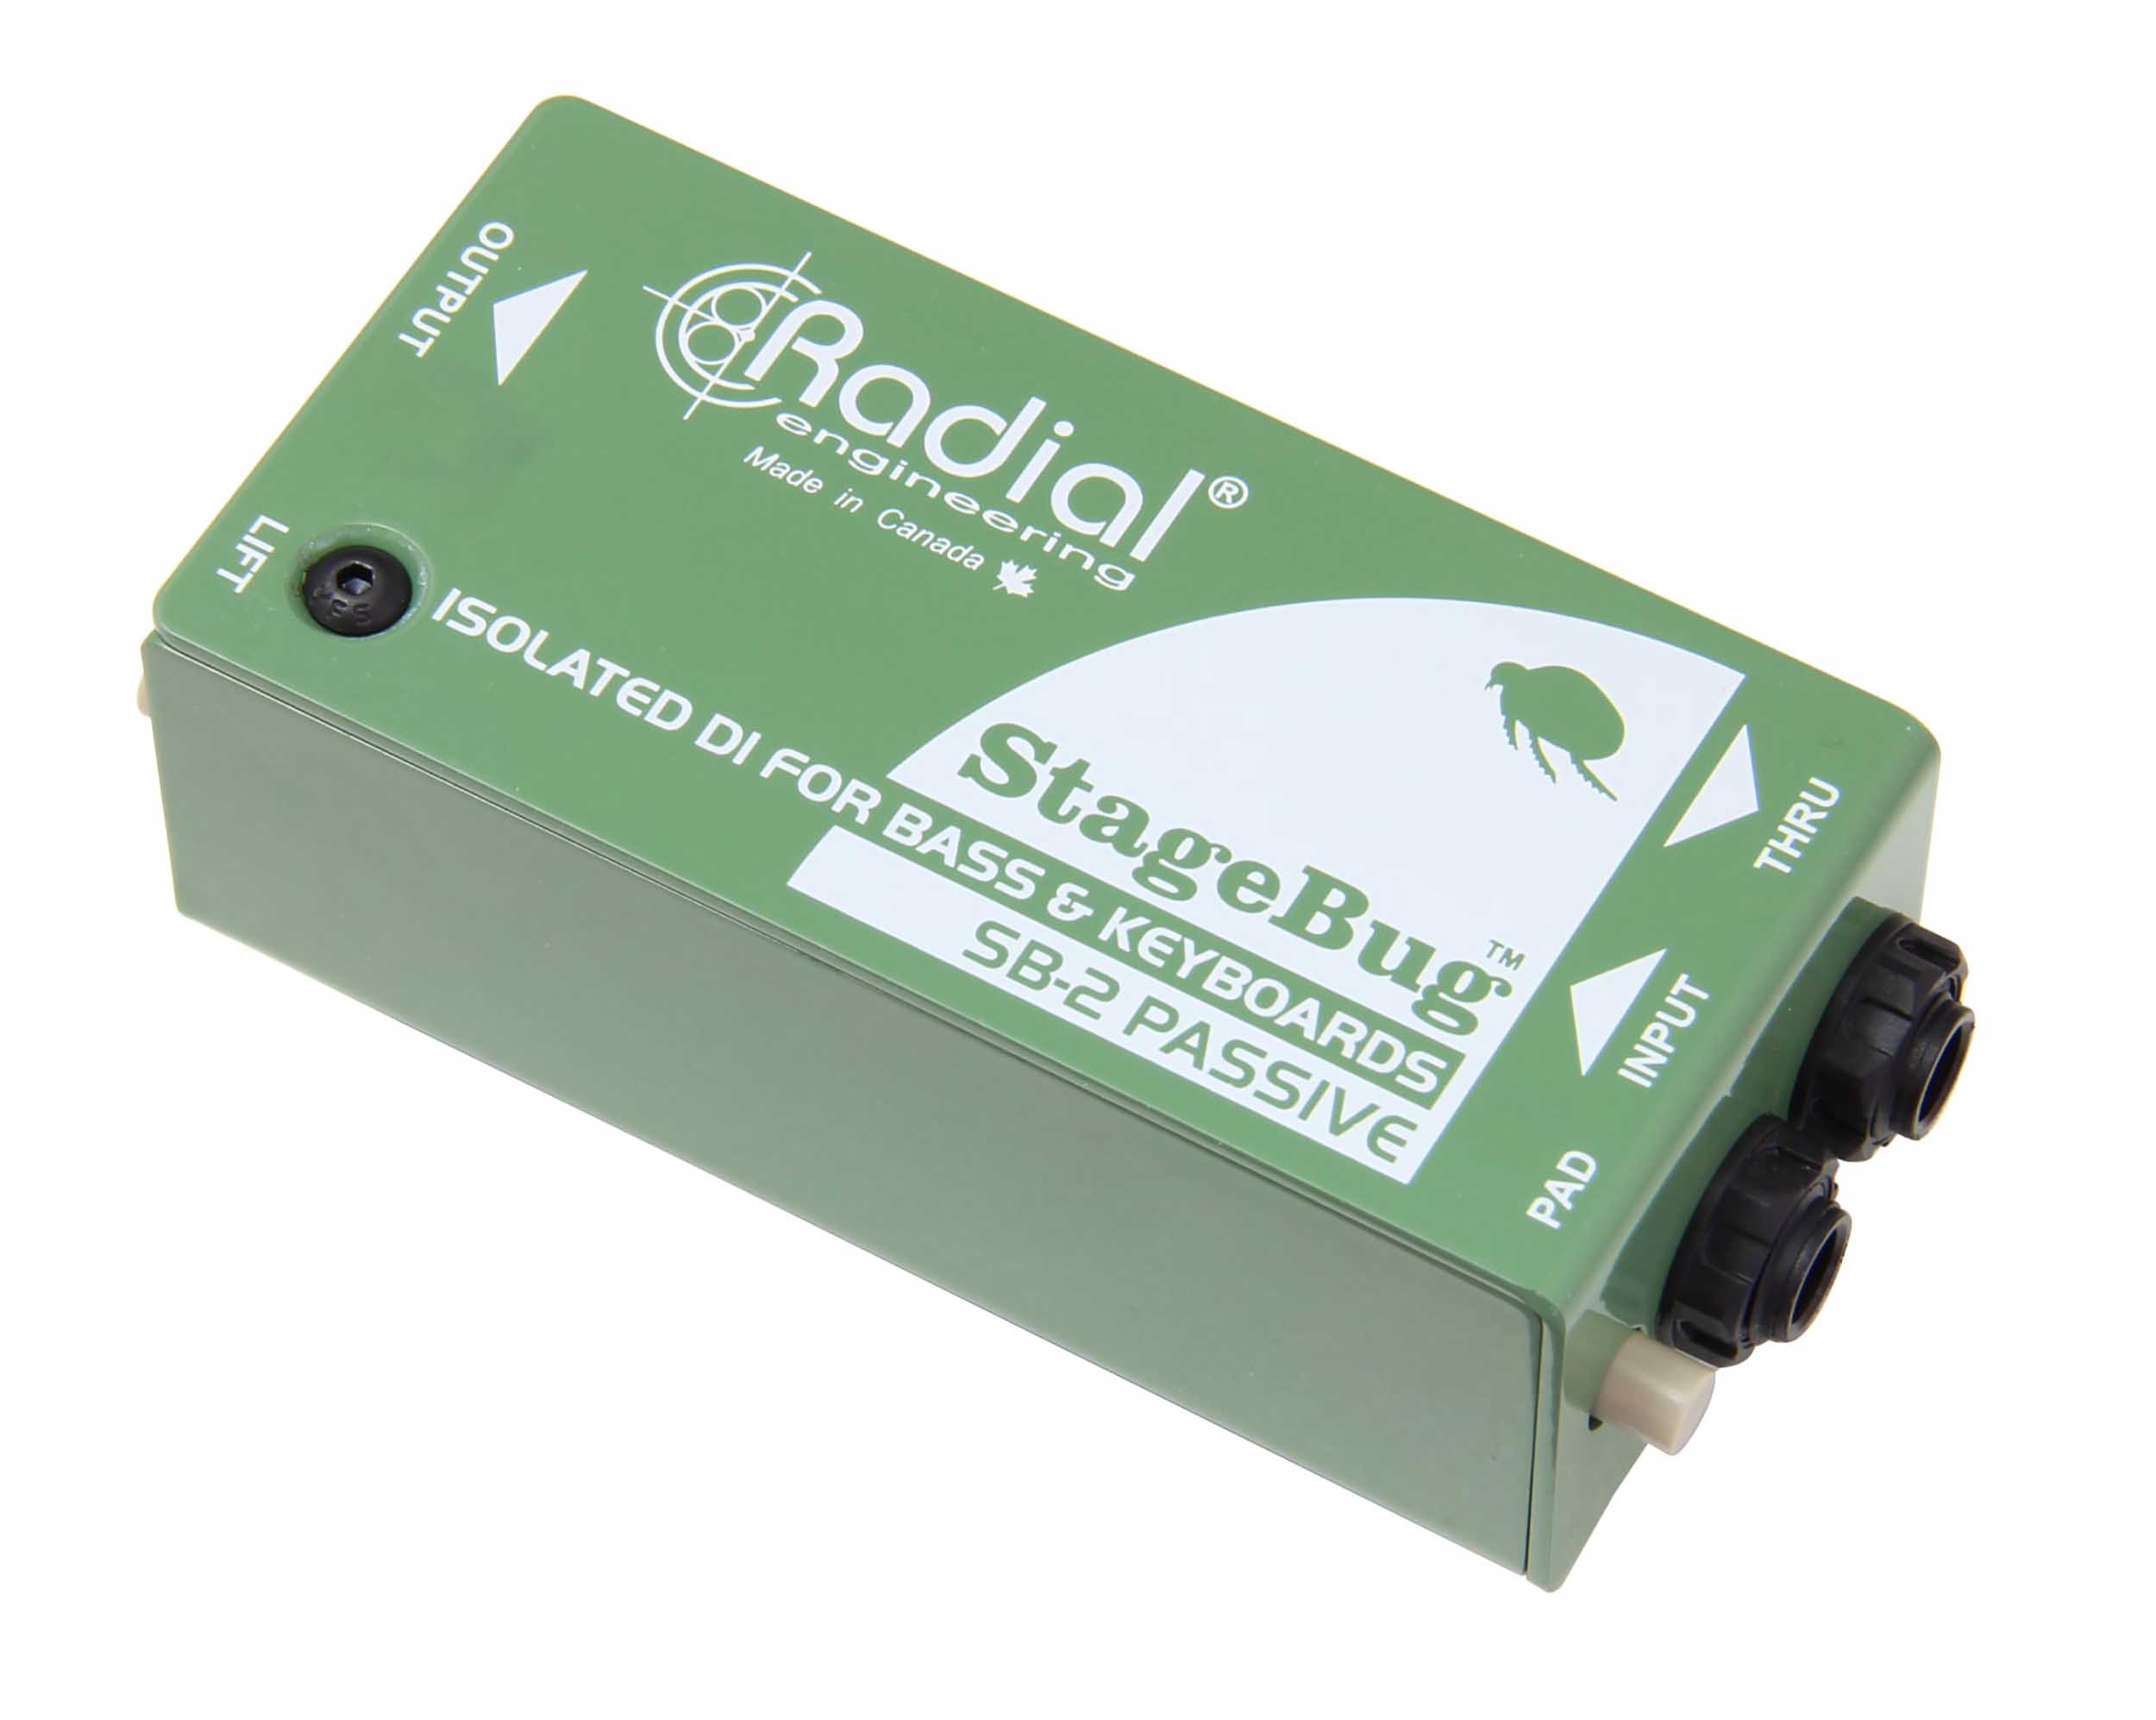 Radial Engineering StageBug SB-2 Passive Direct Box by Radial Engineering